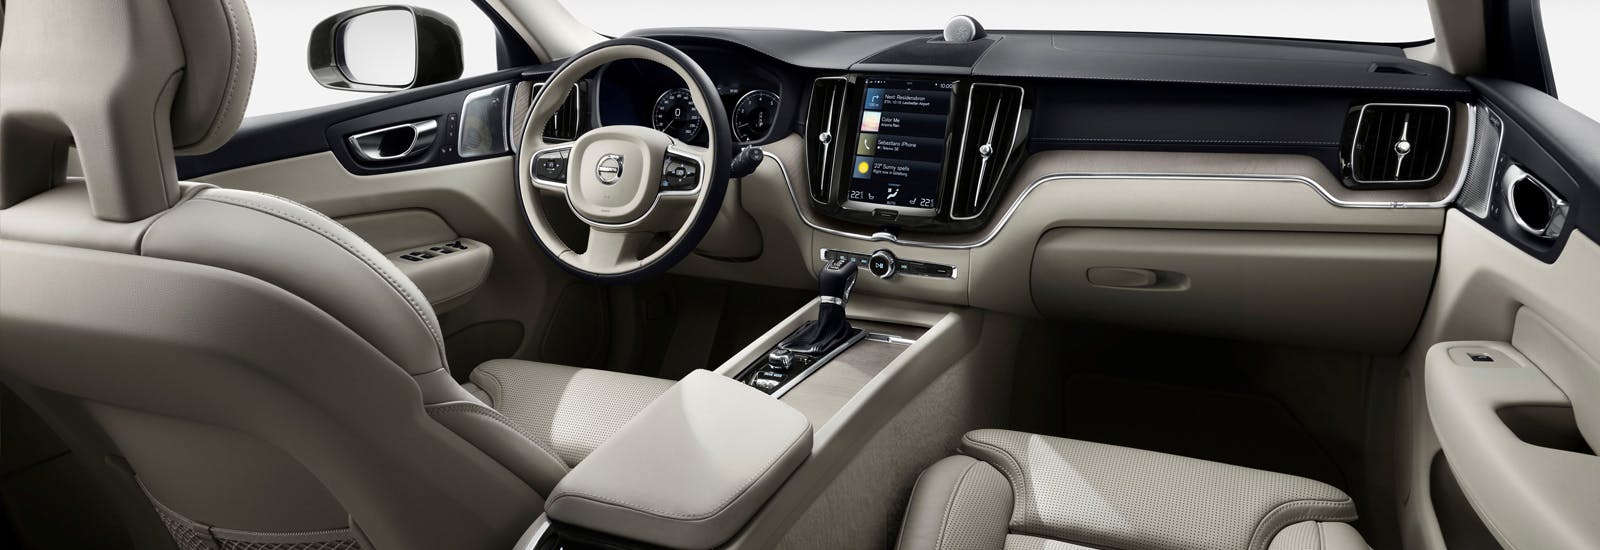 Volvo-XC60-interior.jpg